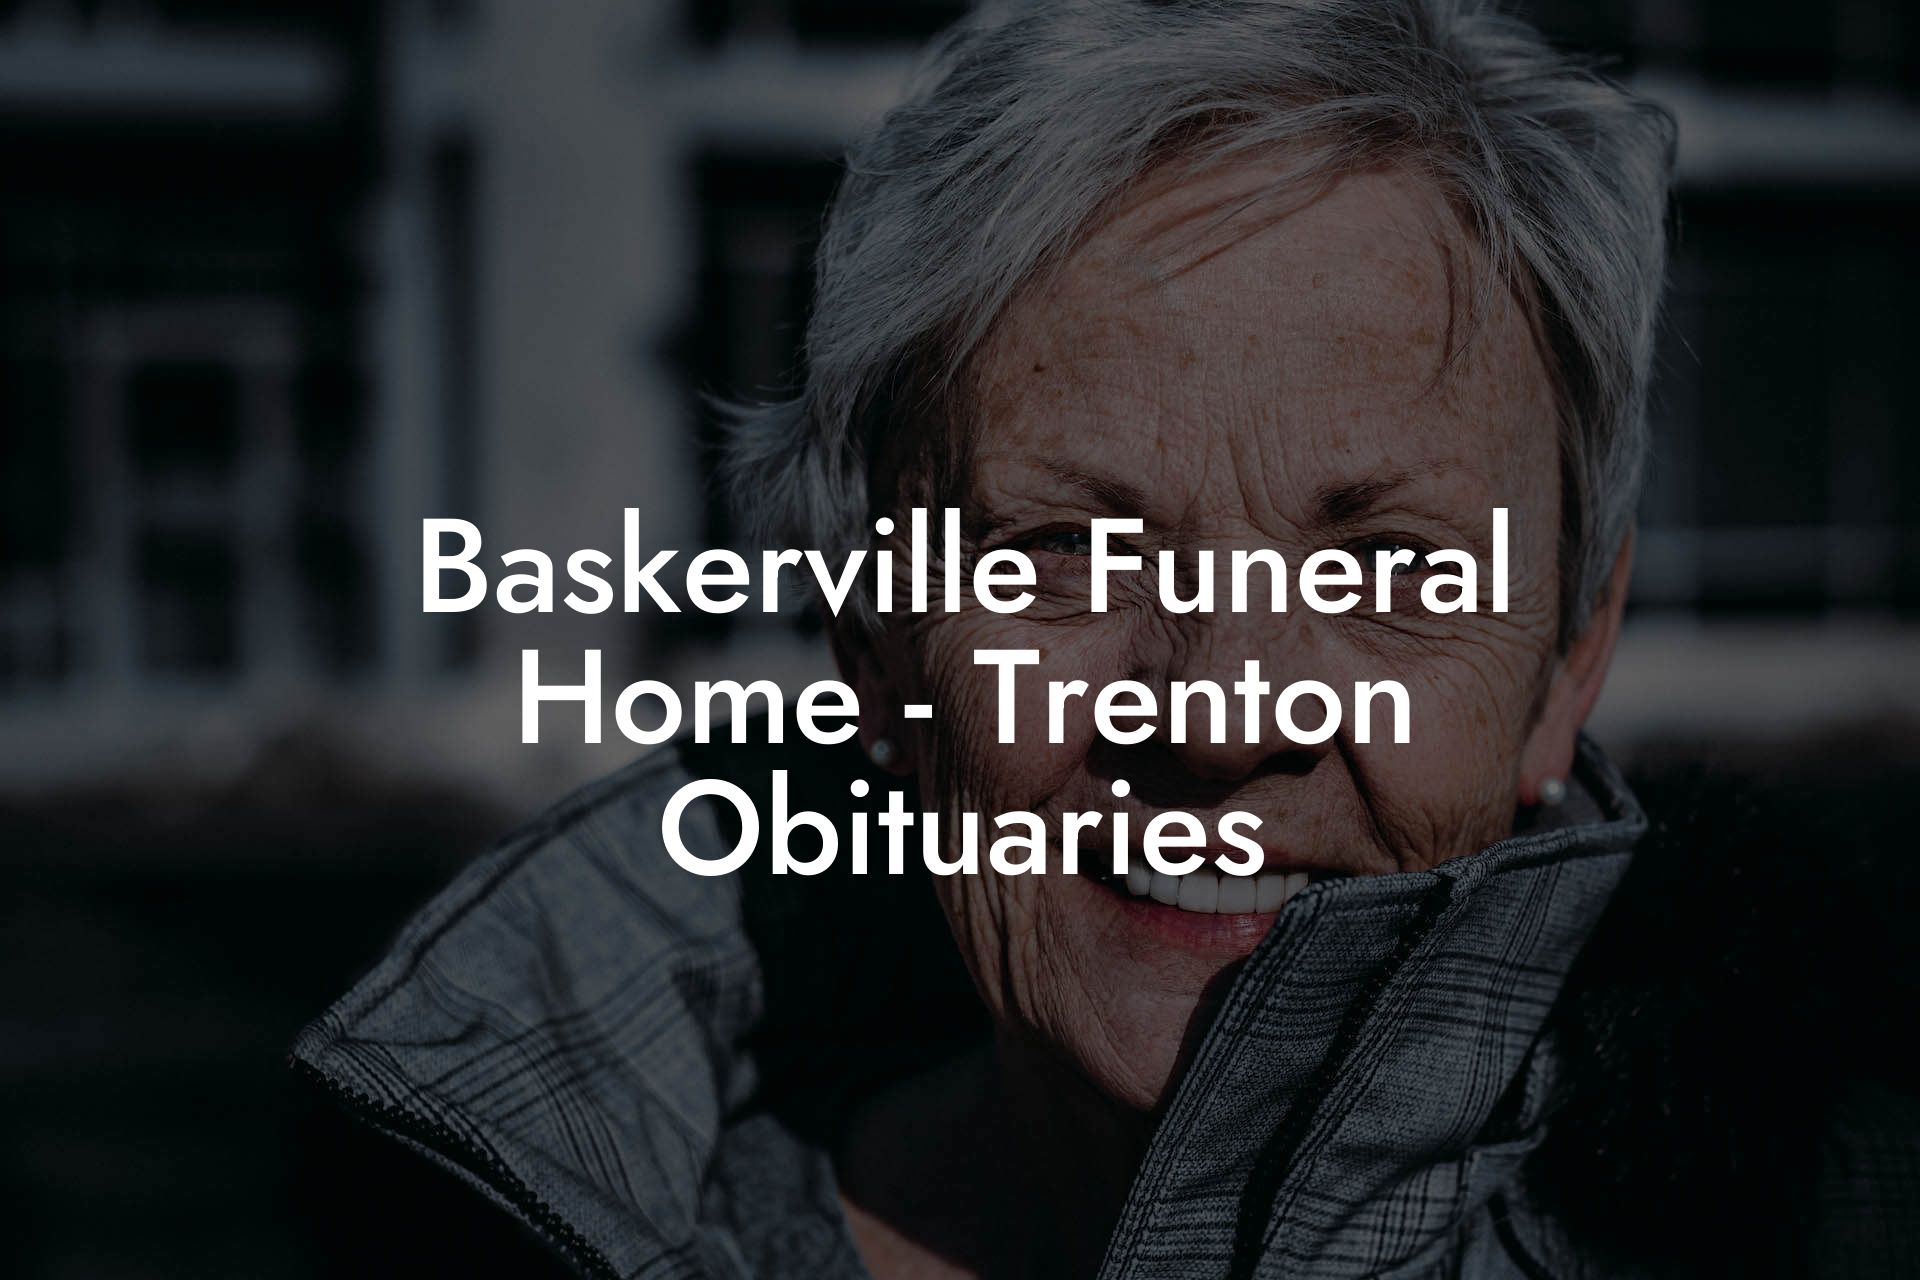 Baskerville Funeral Home - Trenton Obituaries